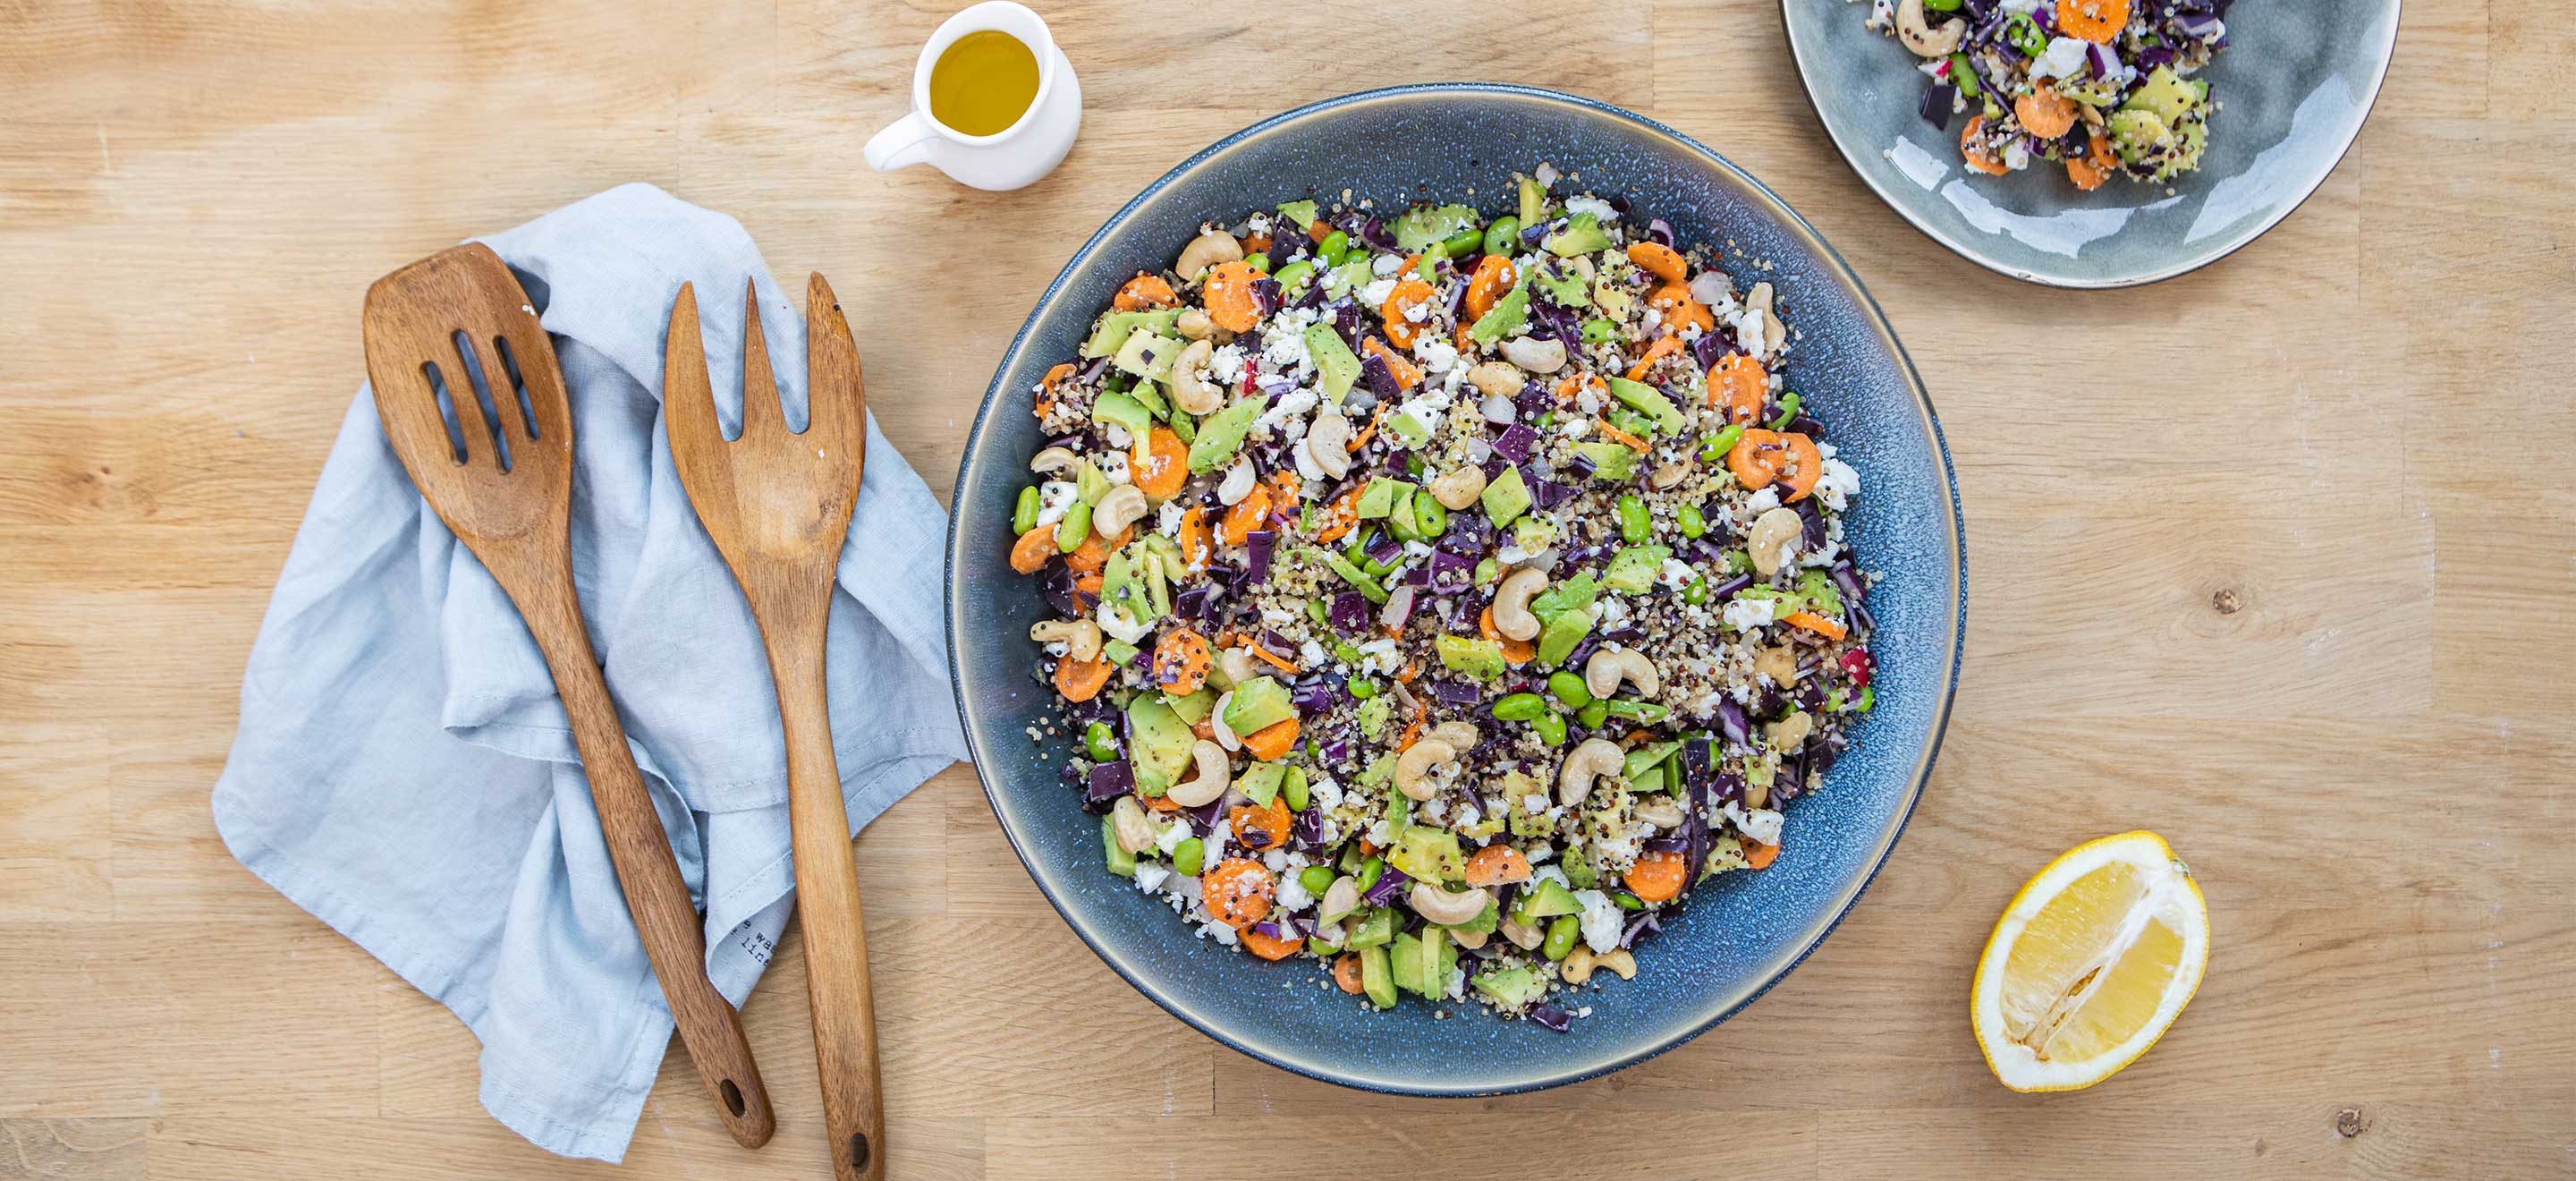 Salade de quinoa aux légumes crus et dés de feta